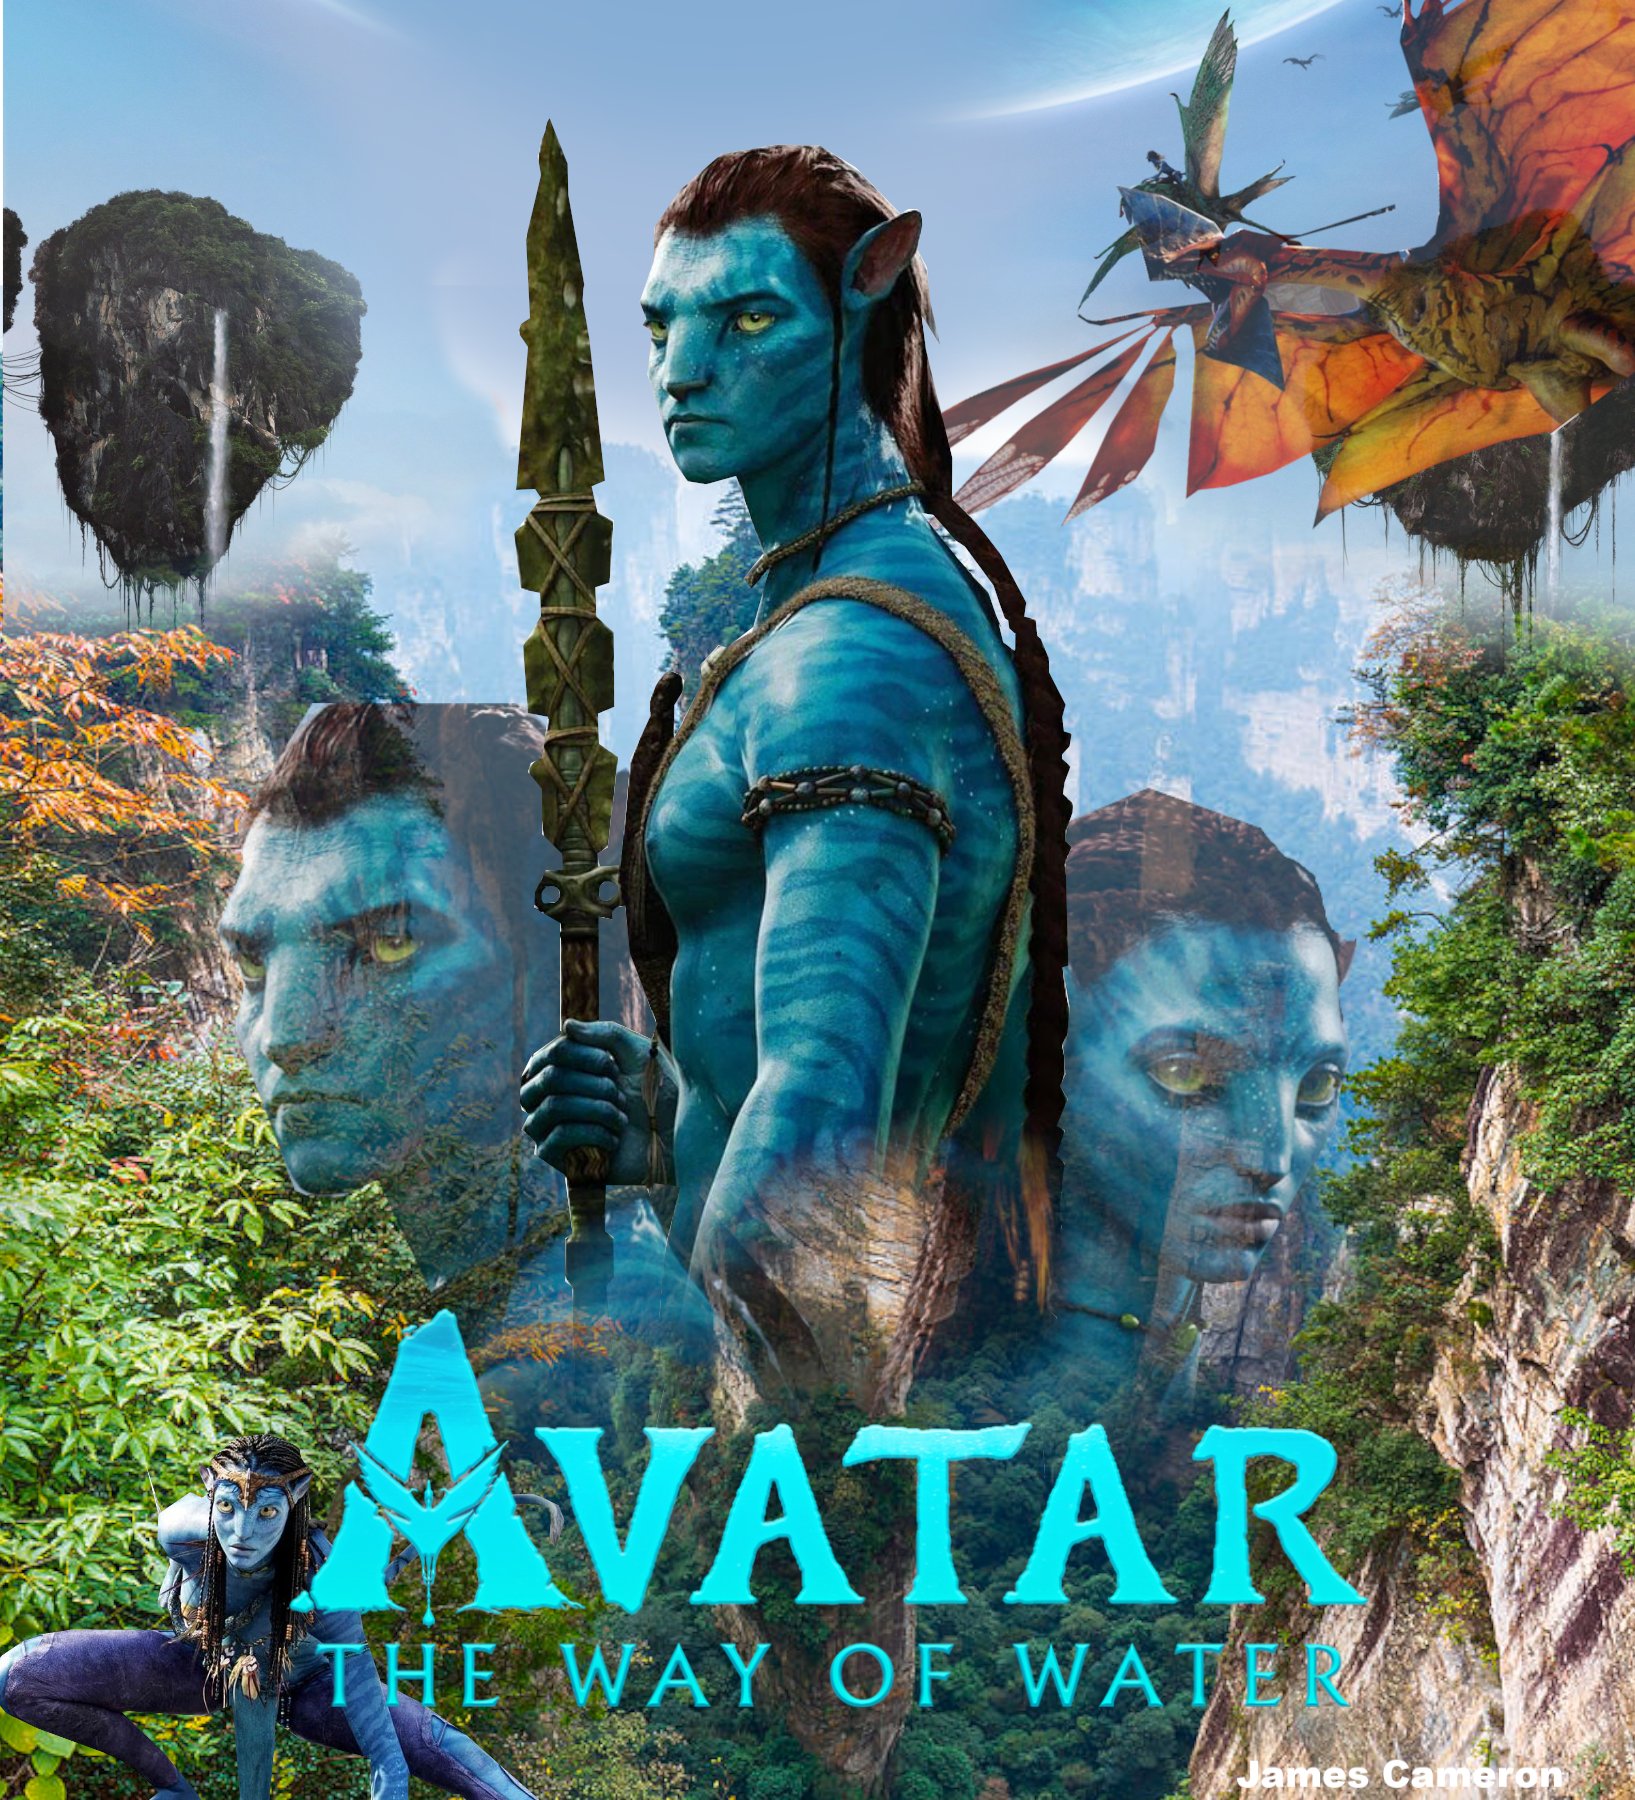 Avatar Movie Poster 10 of 11  IMP Awards